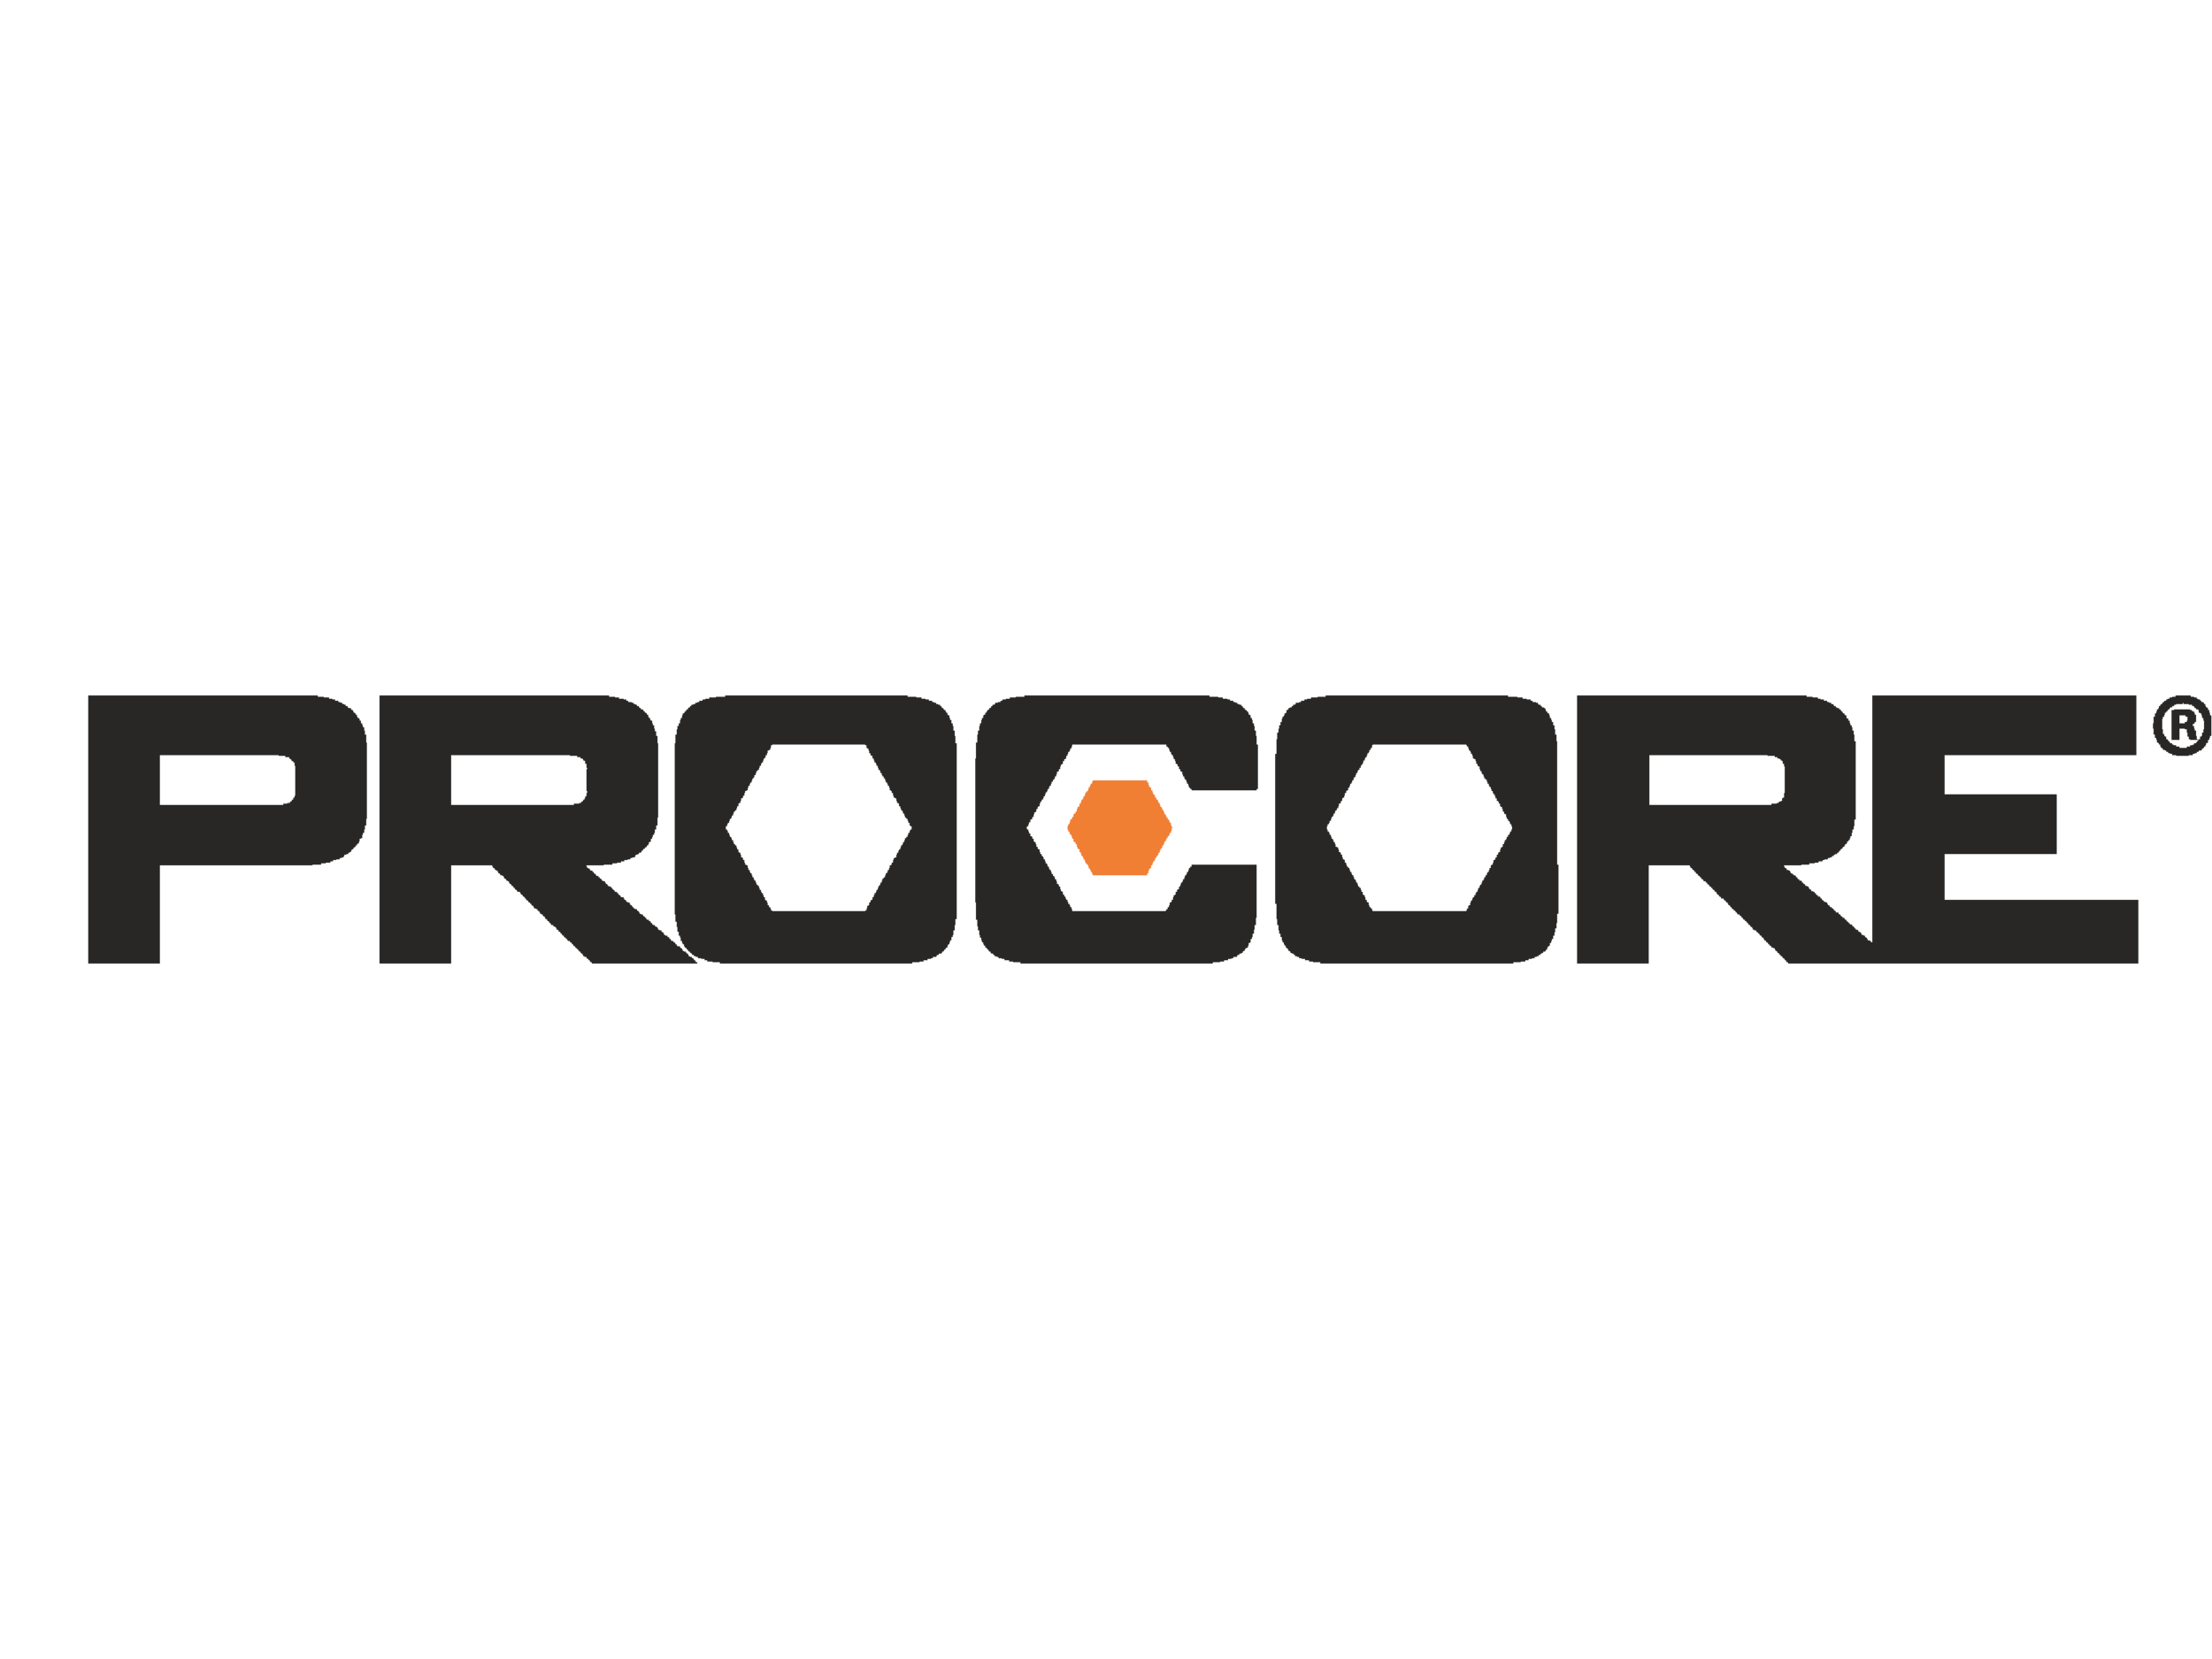 portco-logo-full-01.png